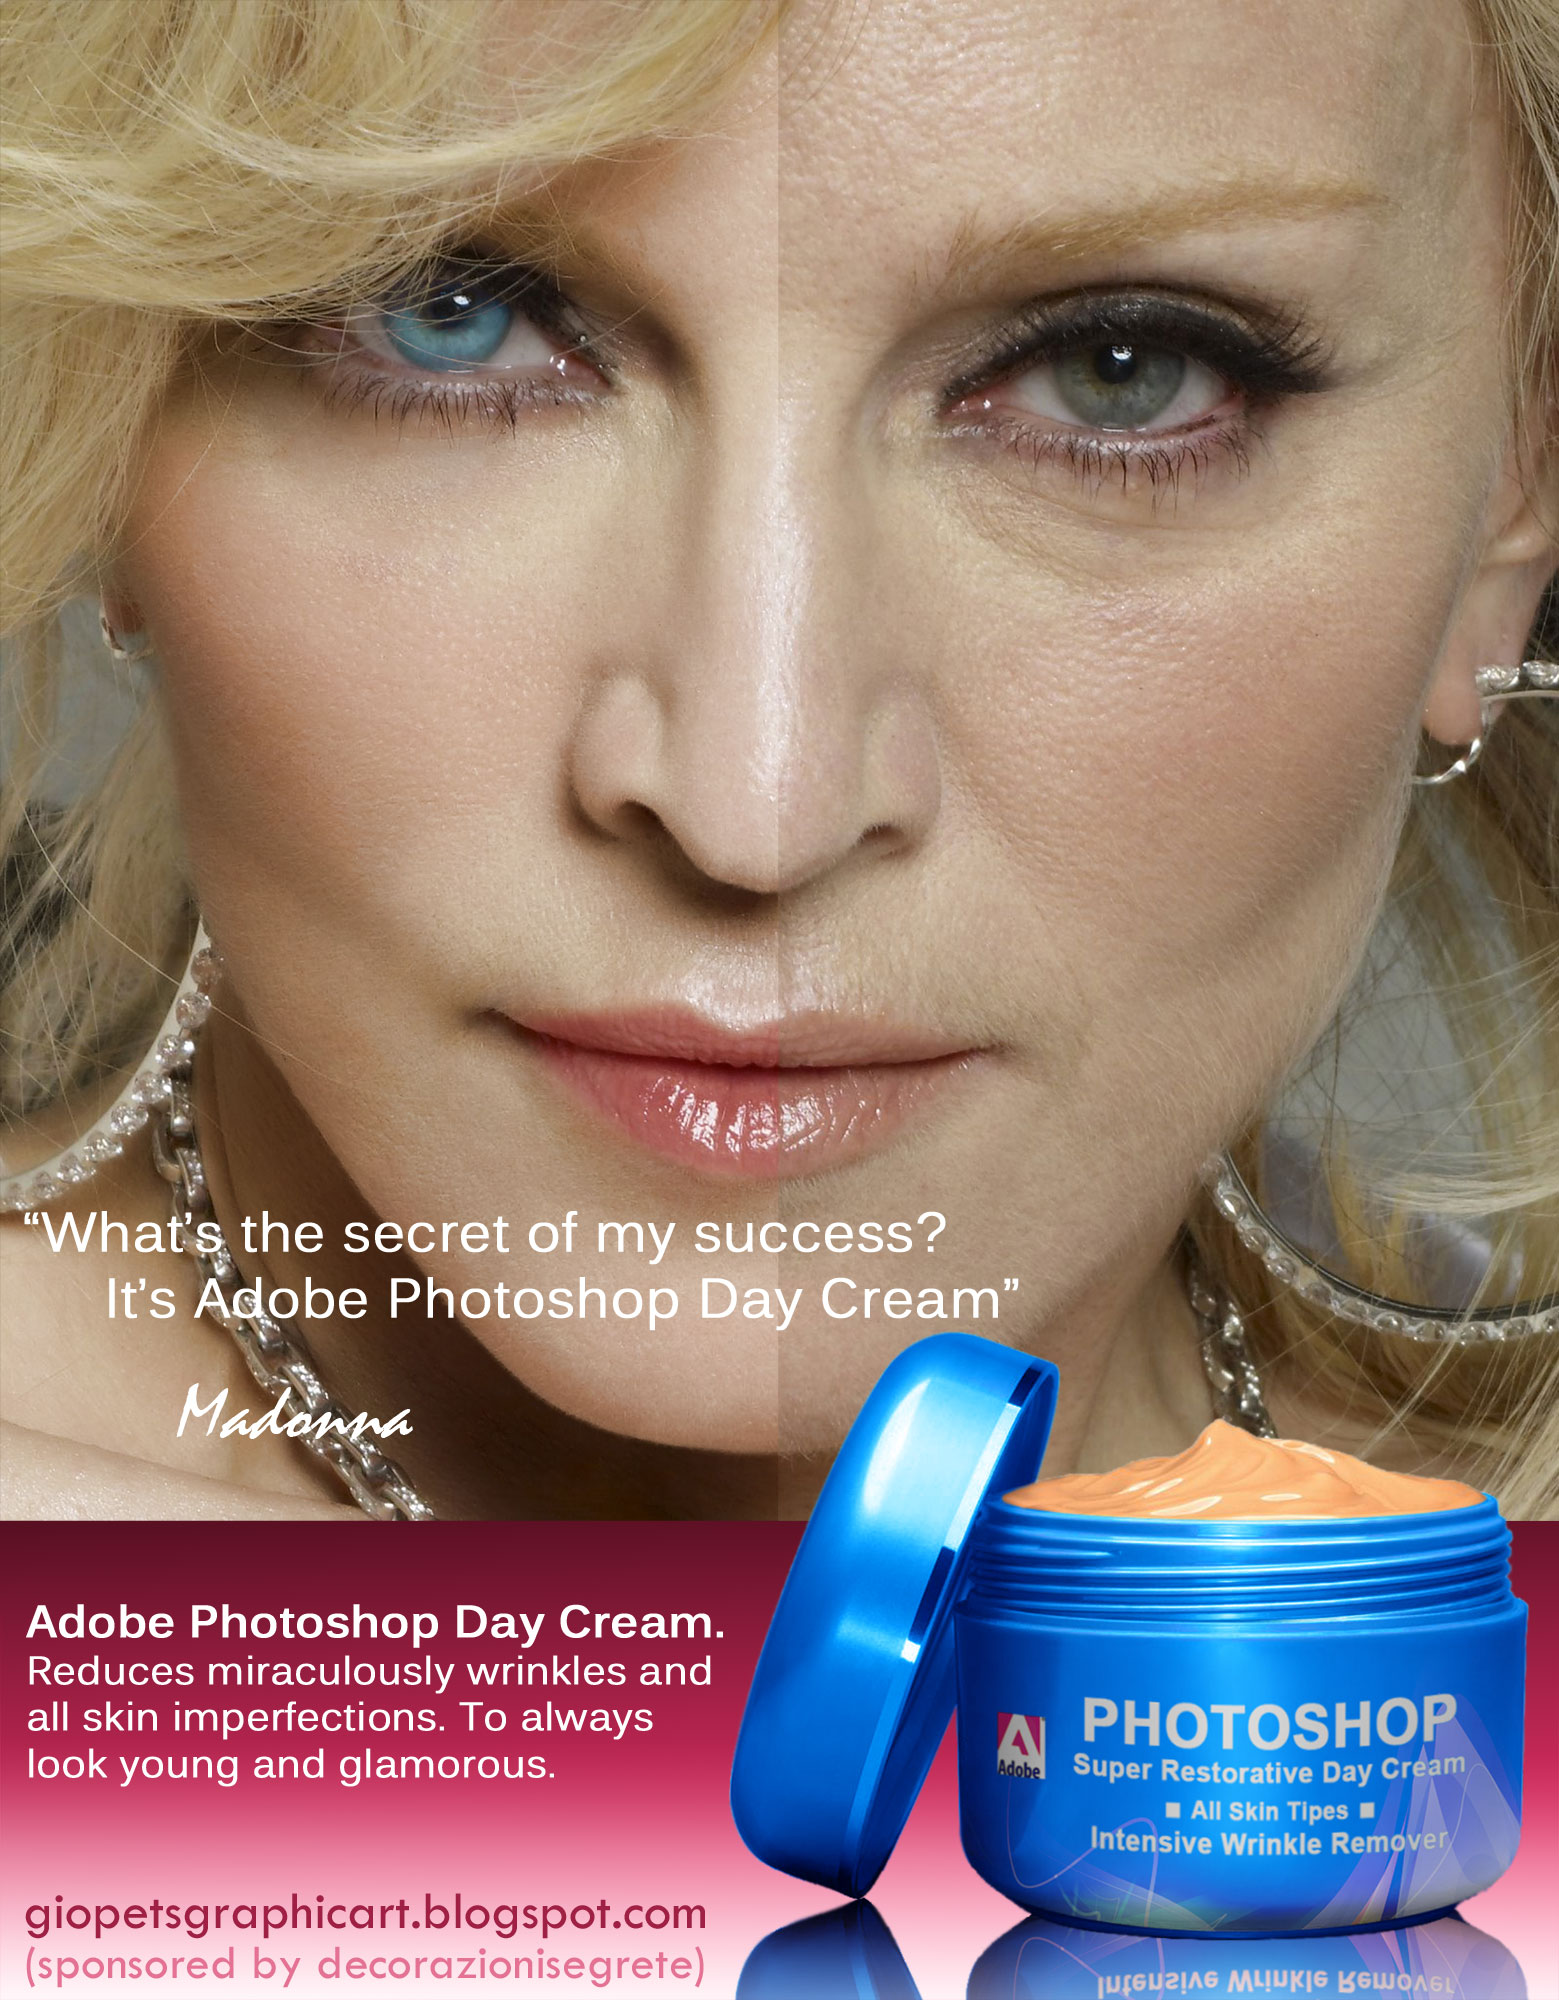 Madonnaphotoshopmadonna Photoshop Cream Adobe Day